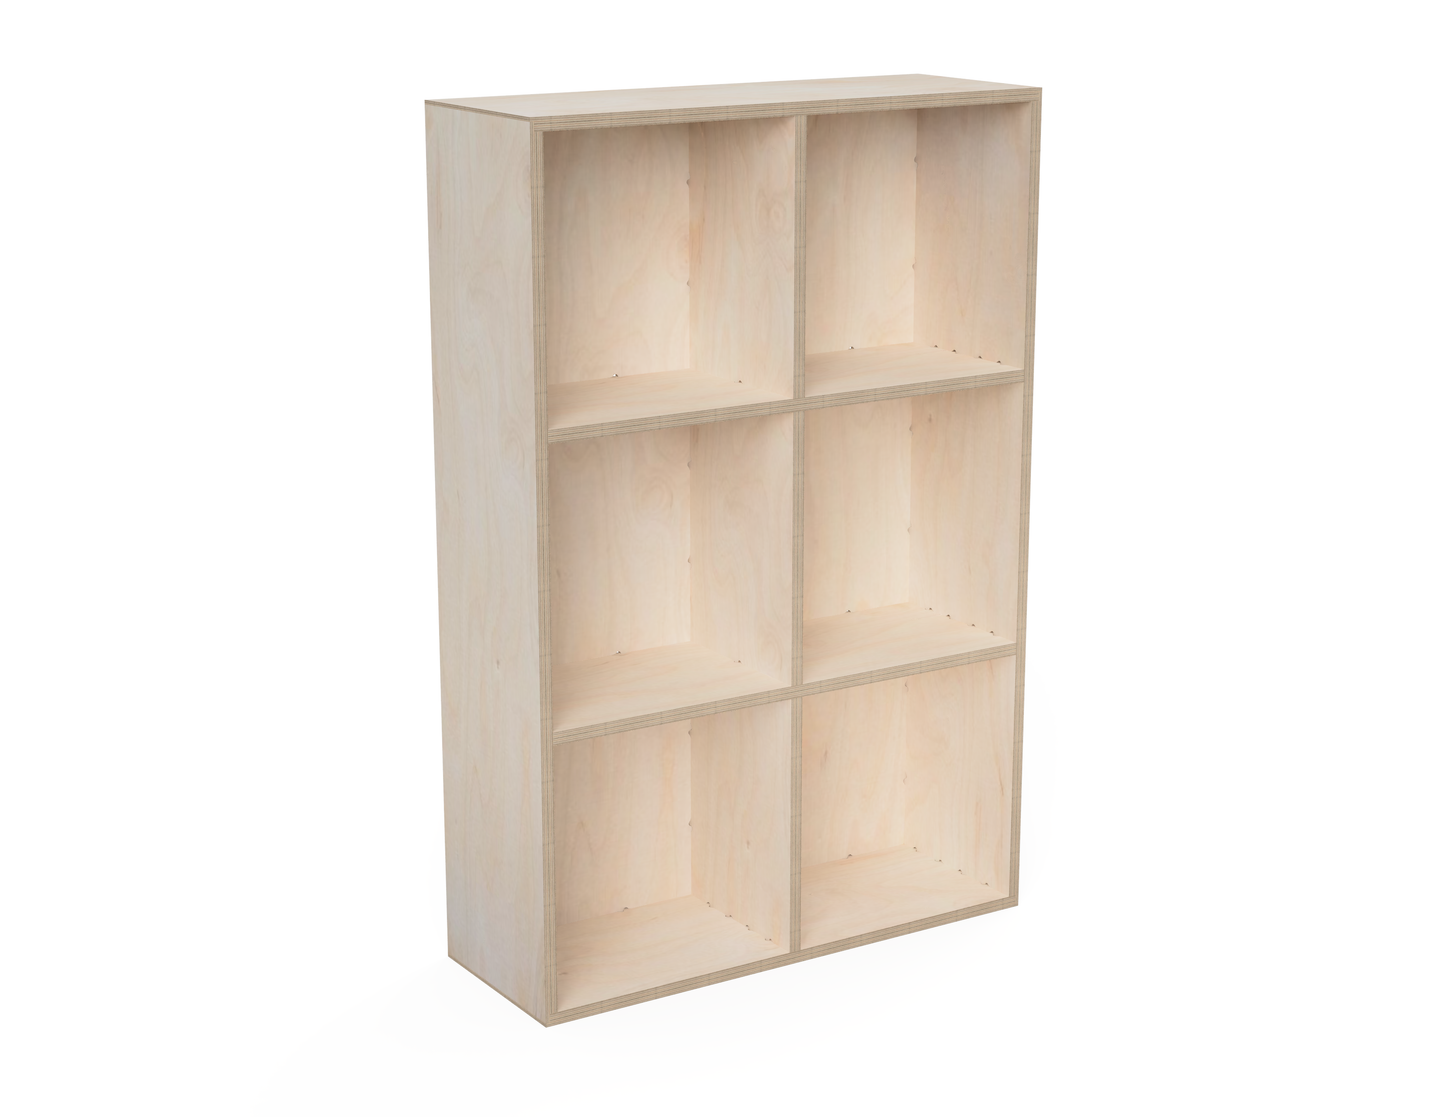 Wall Shelf - 3 x 2 Cubes DXF Files